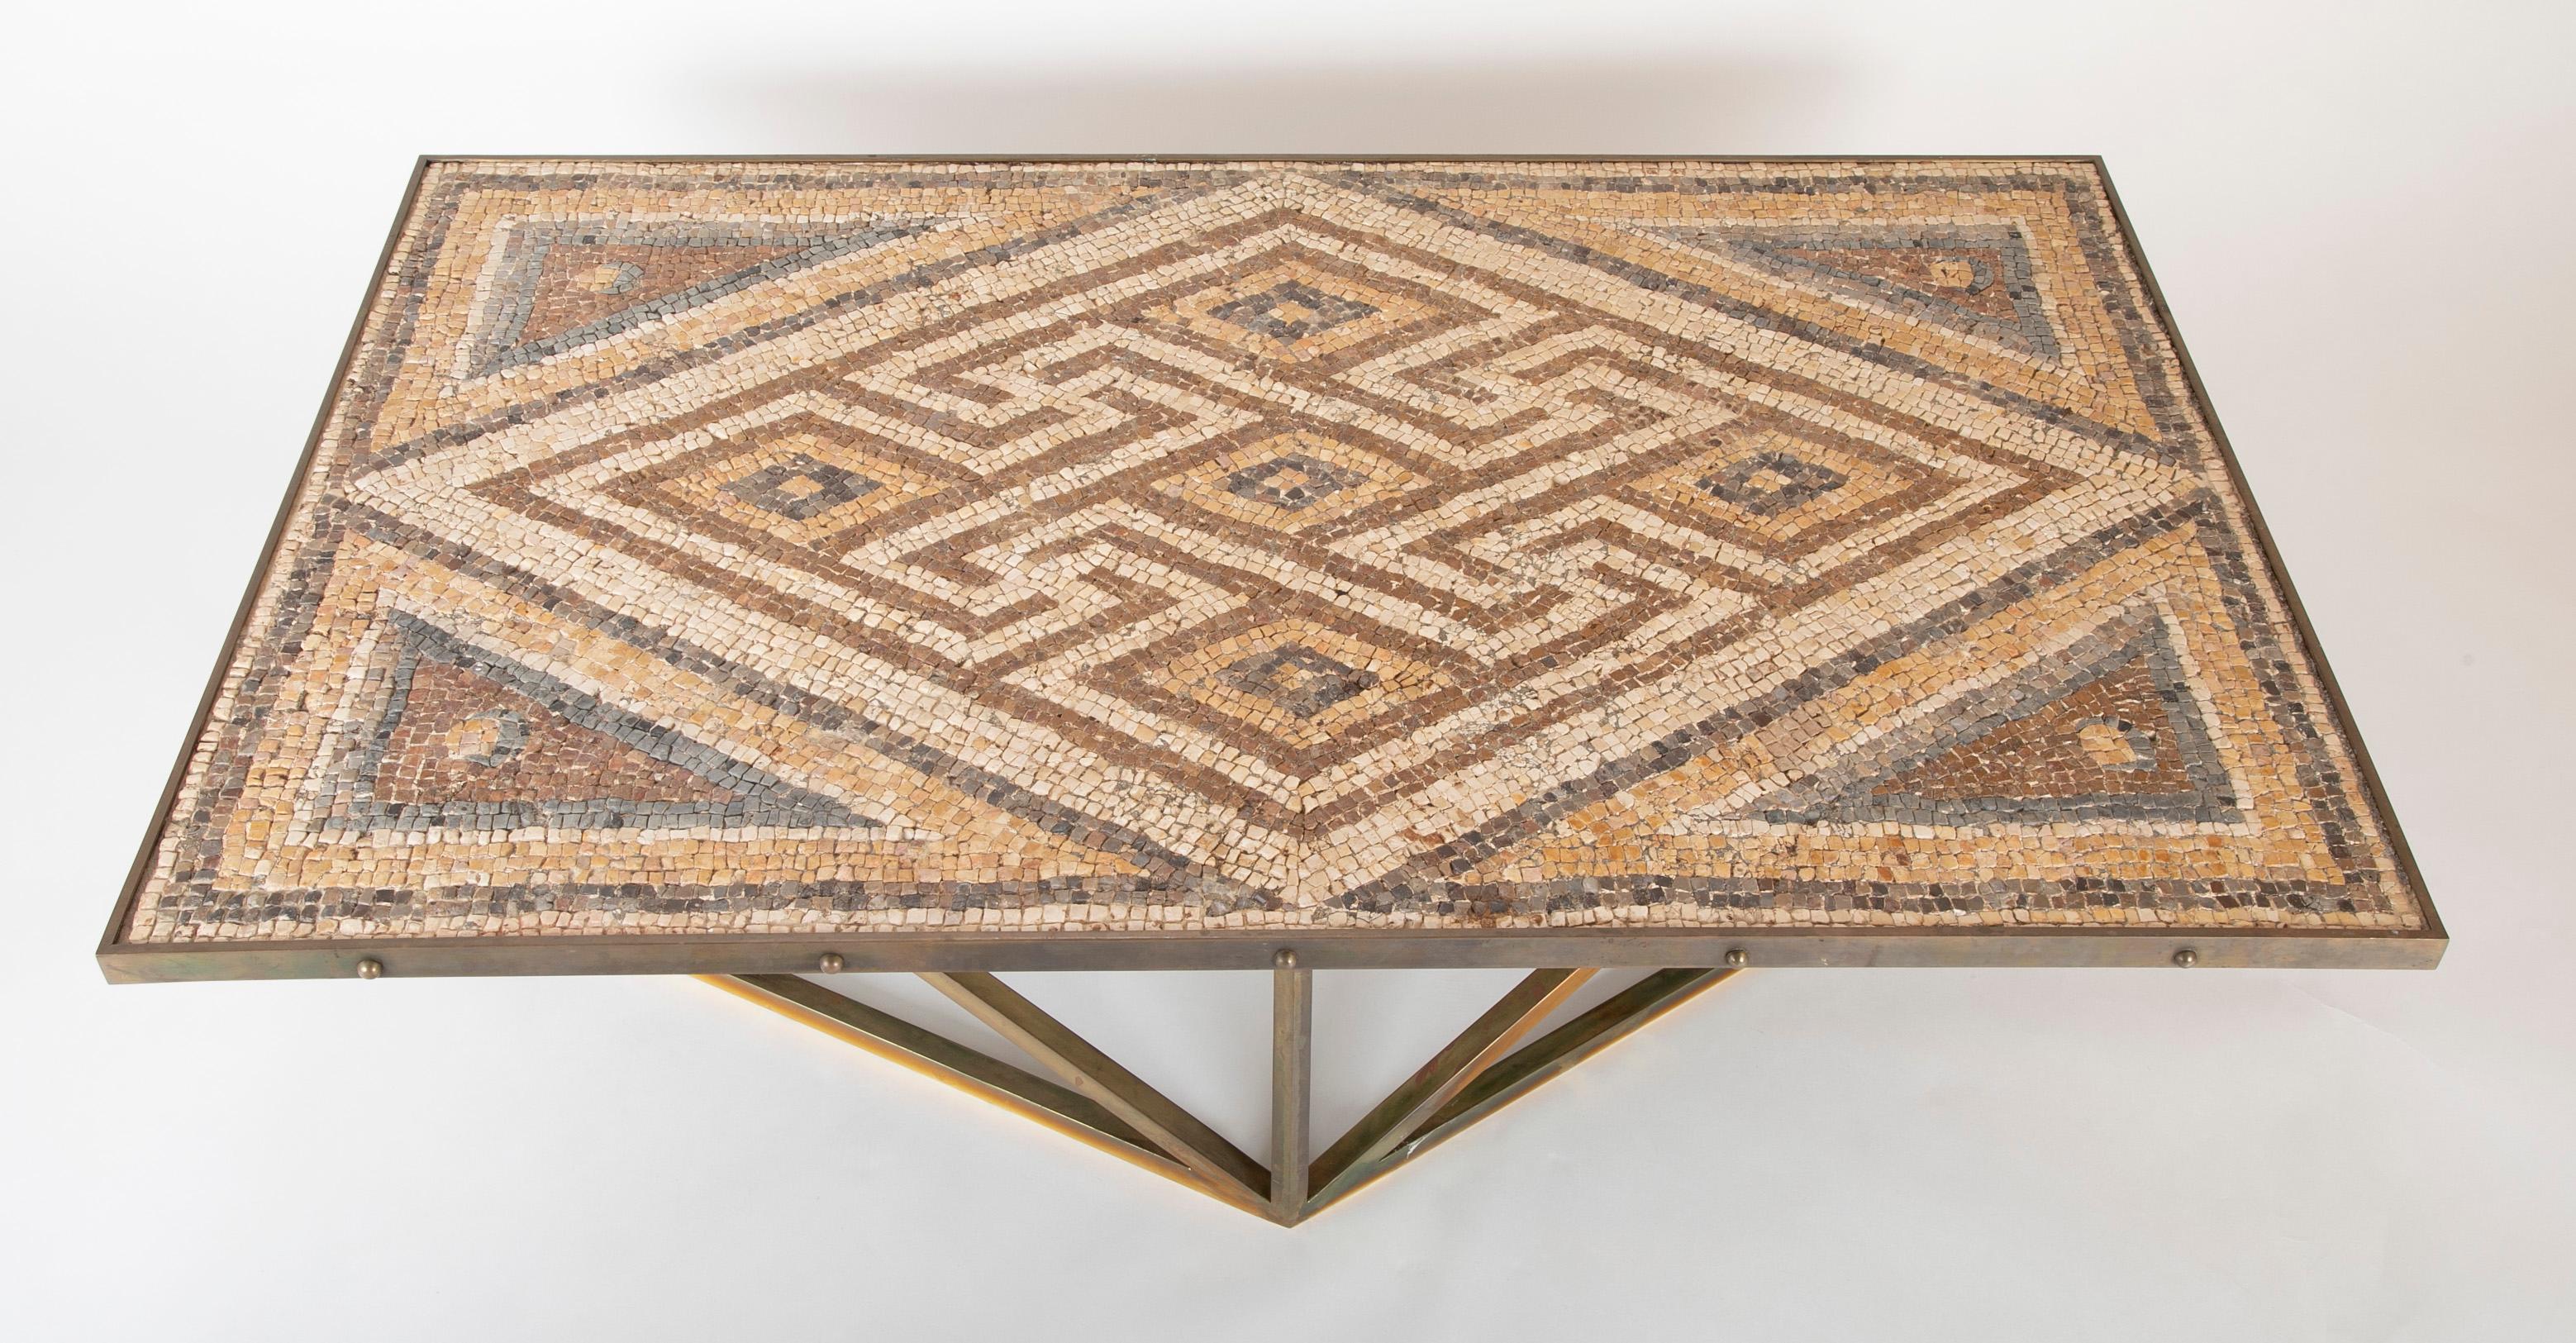 Italian Ancient Roman Mosaic Slab Coffee Table